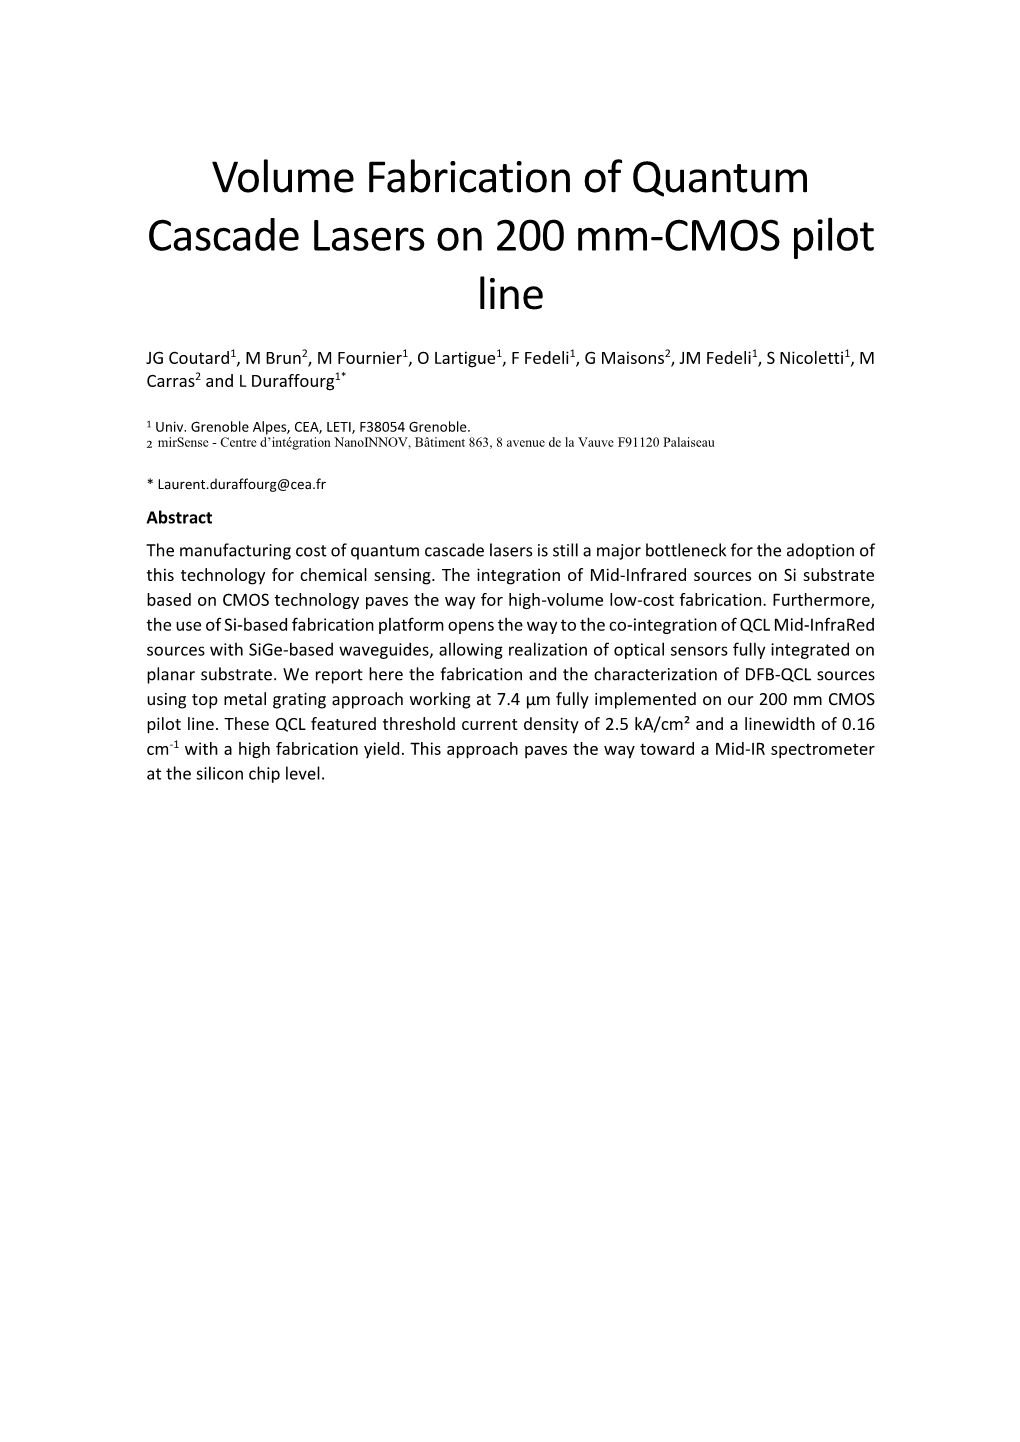 Volume Fabrication of Quantum Cascade Lasers on 200 Mm-CMOS Pilot Line